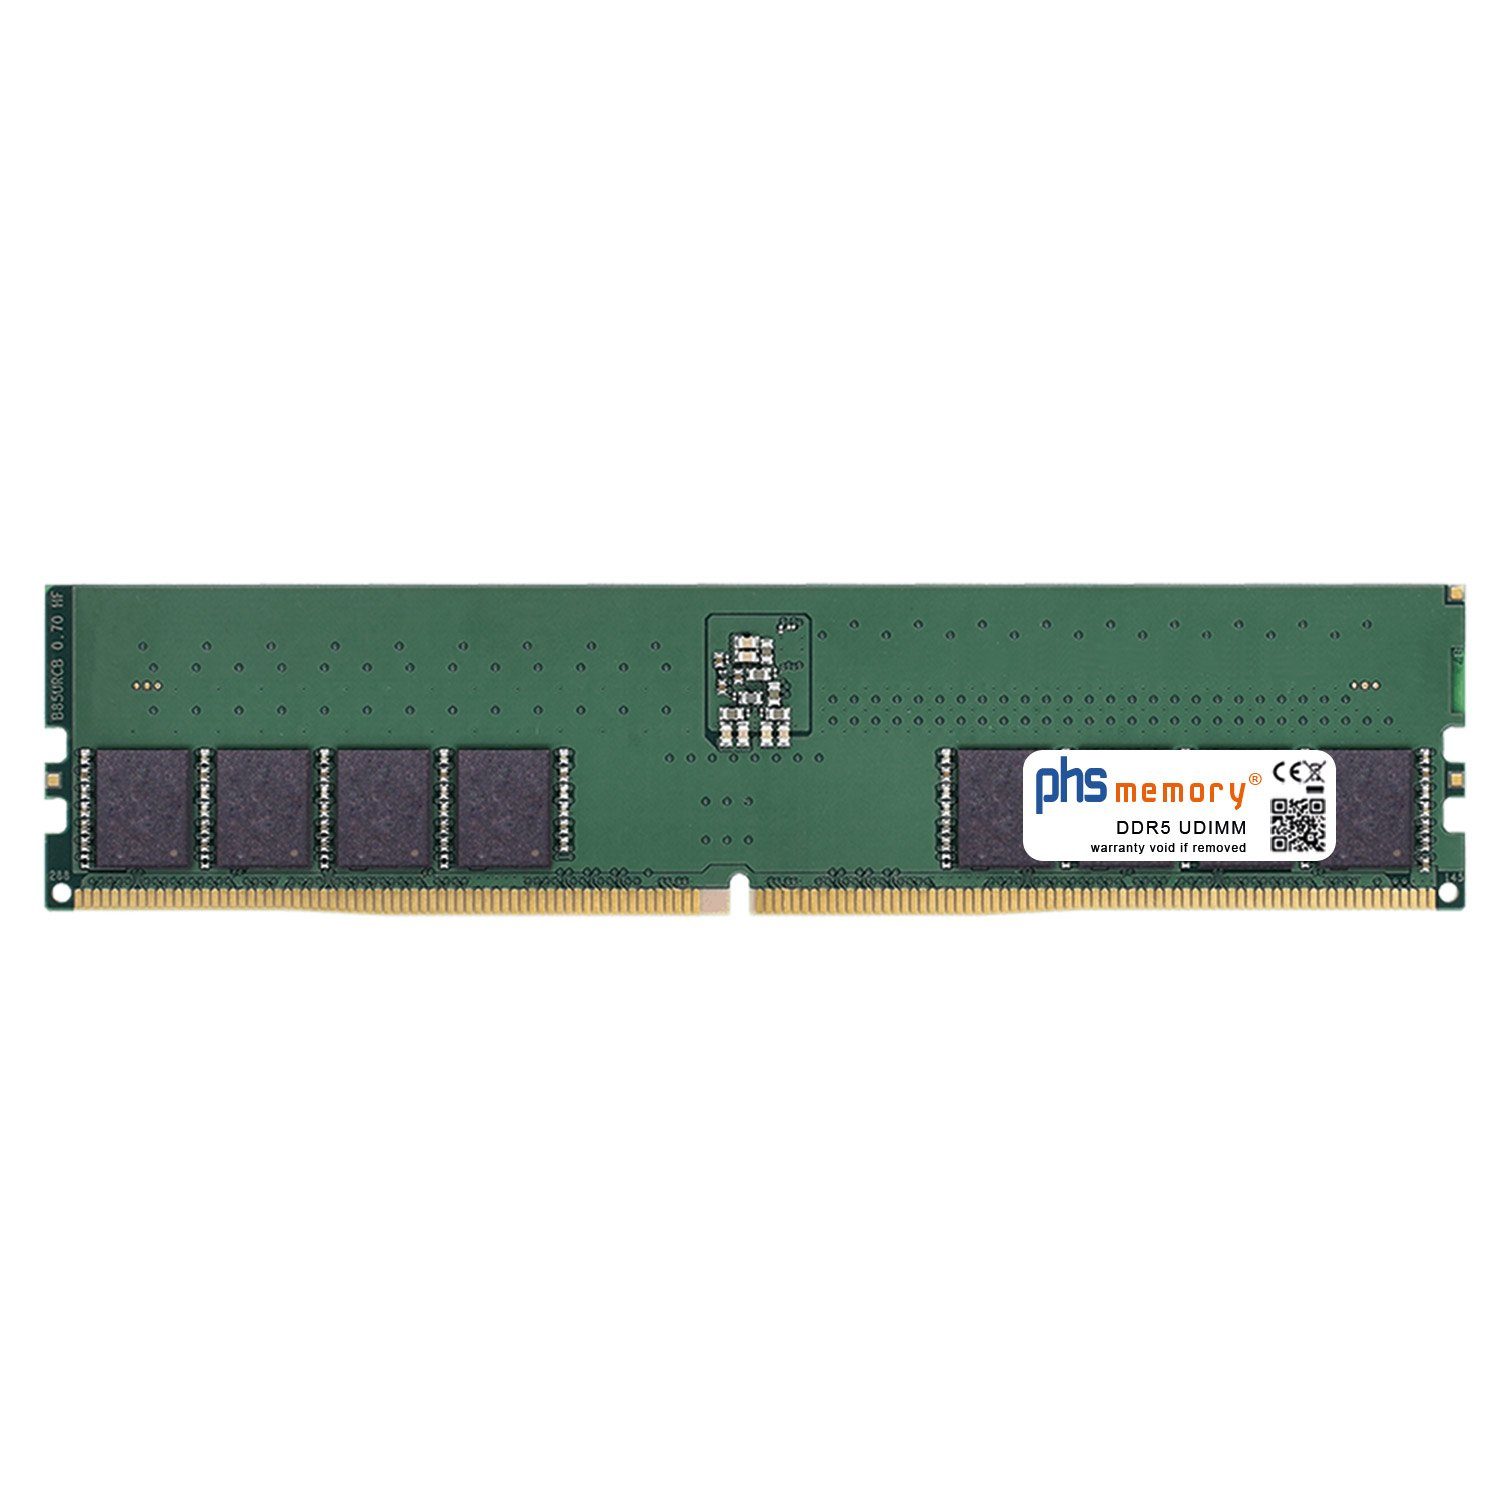 PHS-memory RAM für Captiva Highend Gaming I67-495 Arbeitsspeicher